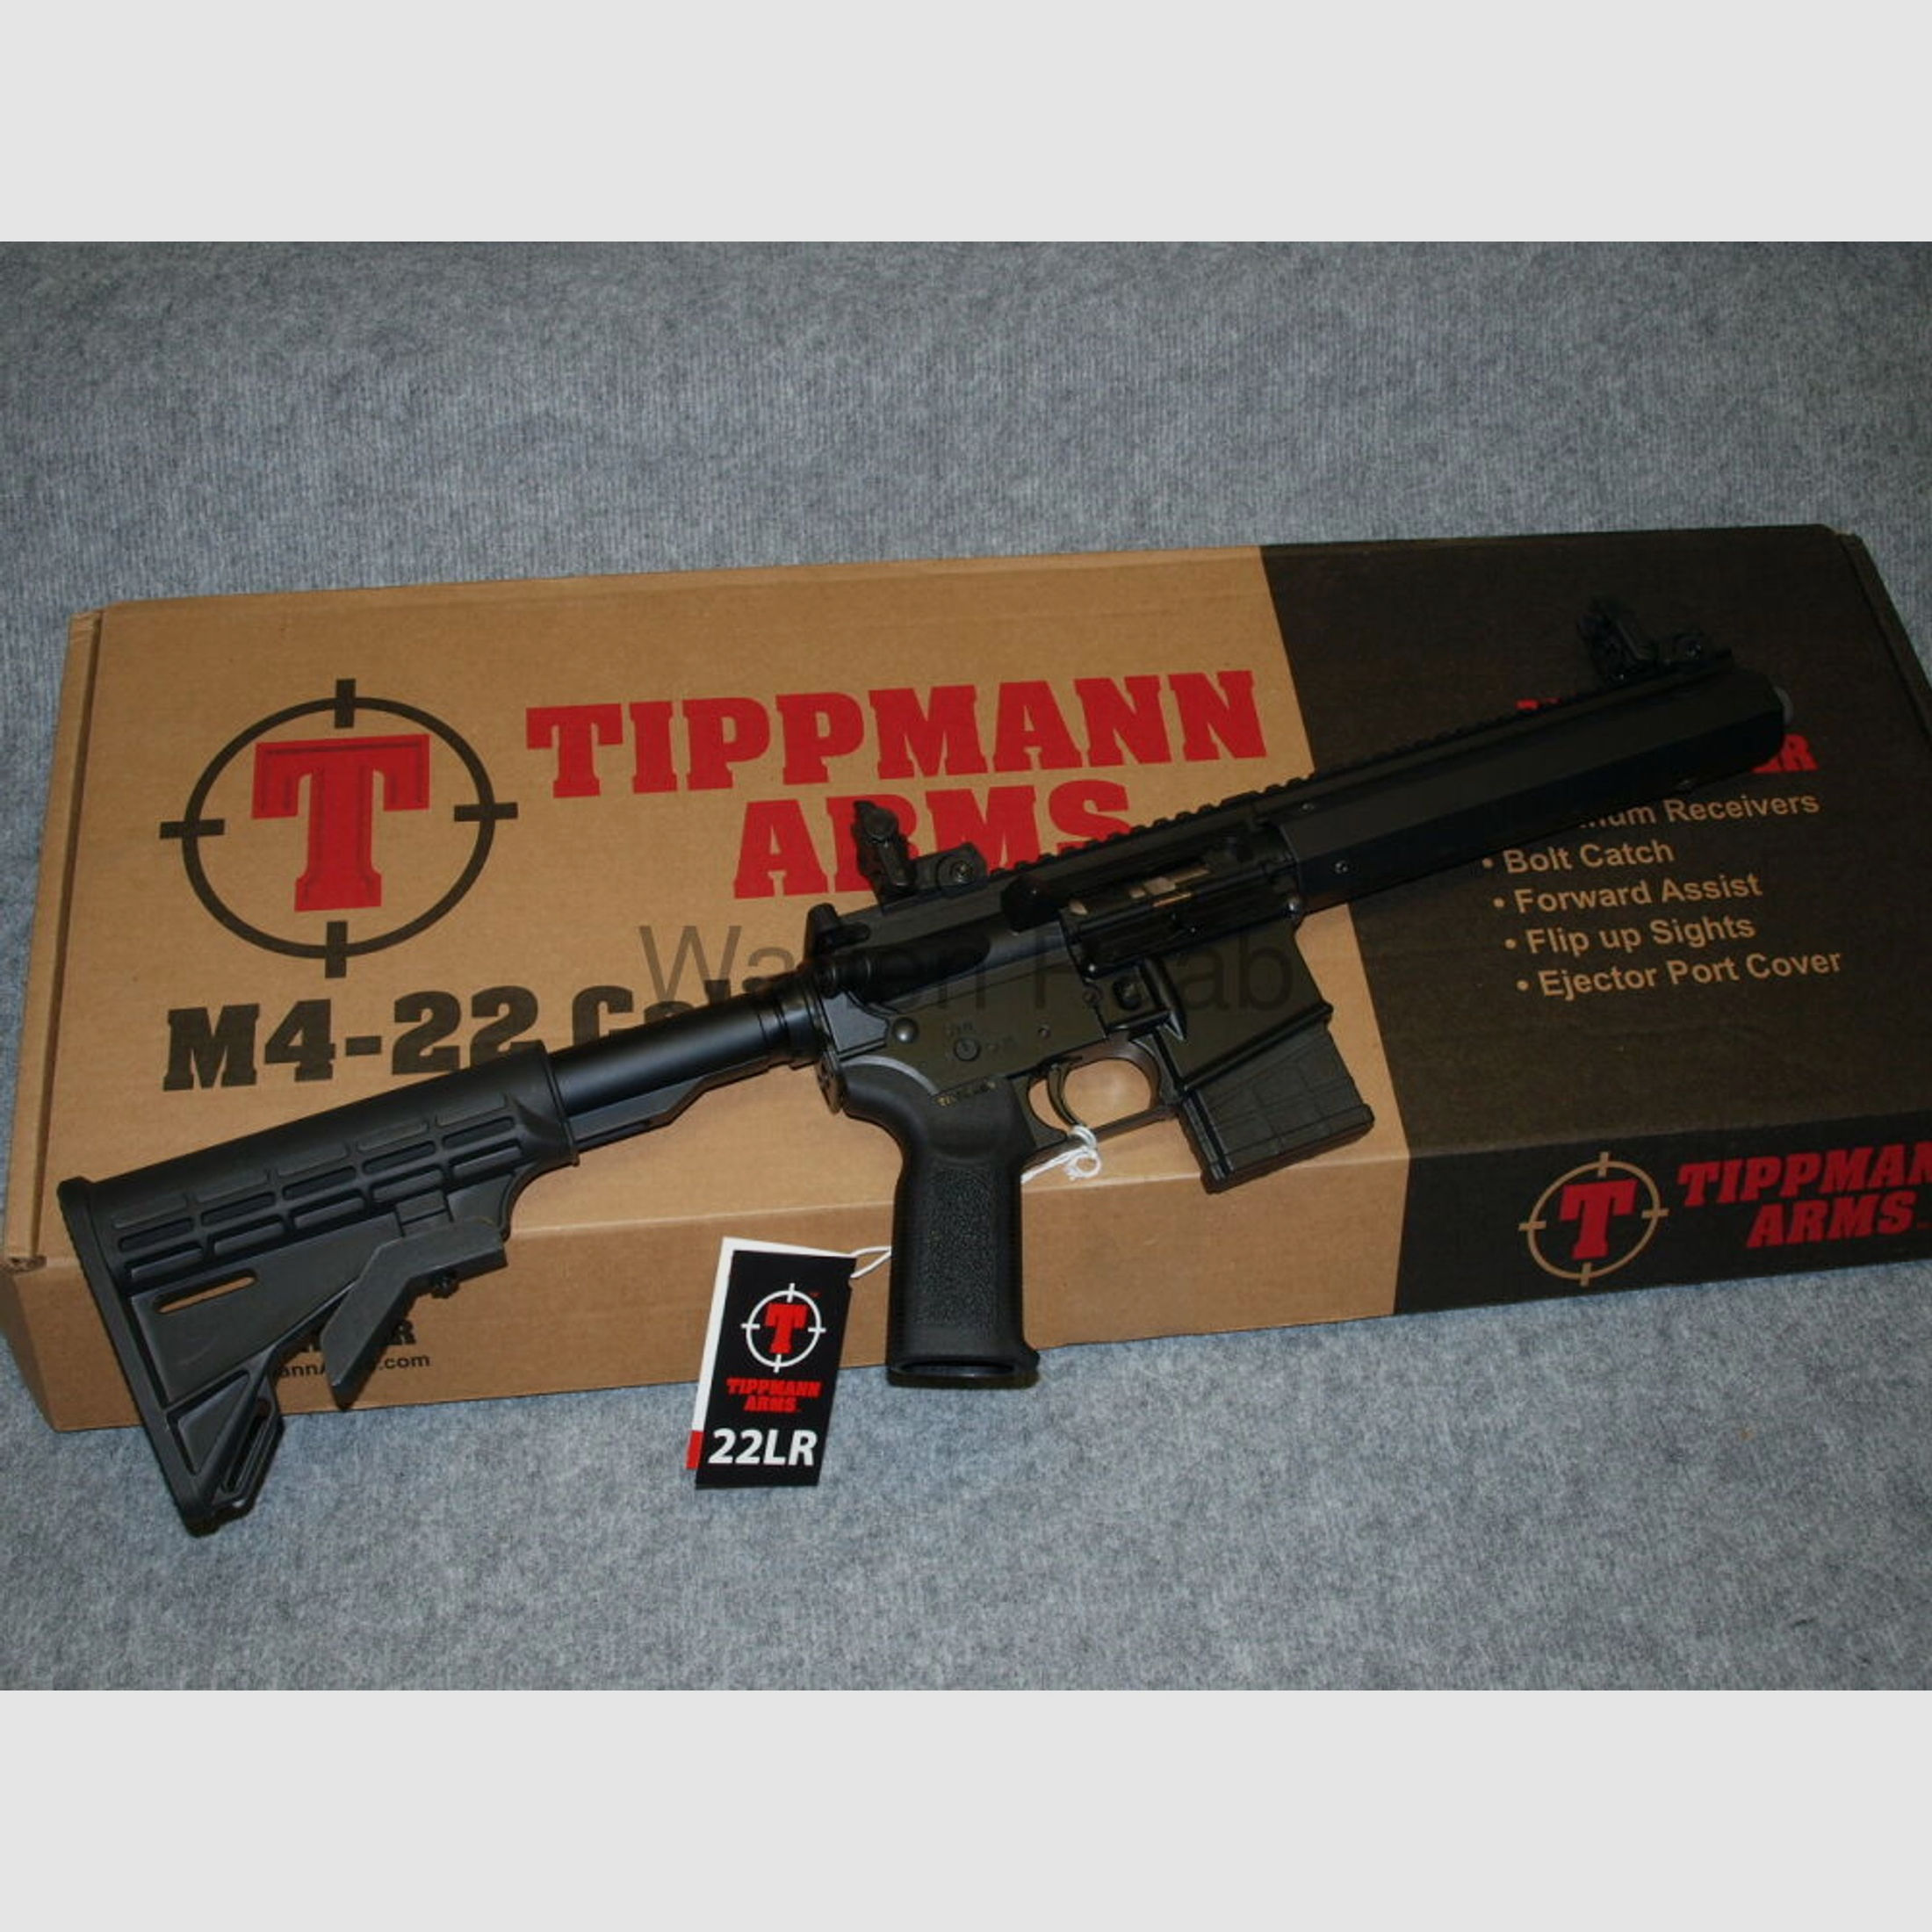 Tippmann Arms	 Tippmann M4-22 ELITE ALPHA-GS